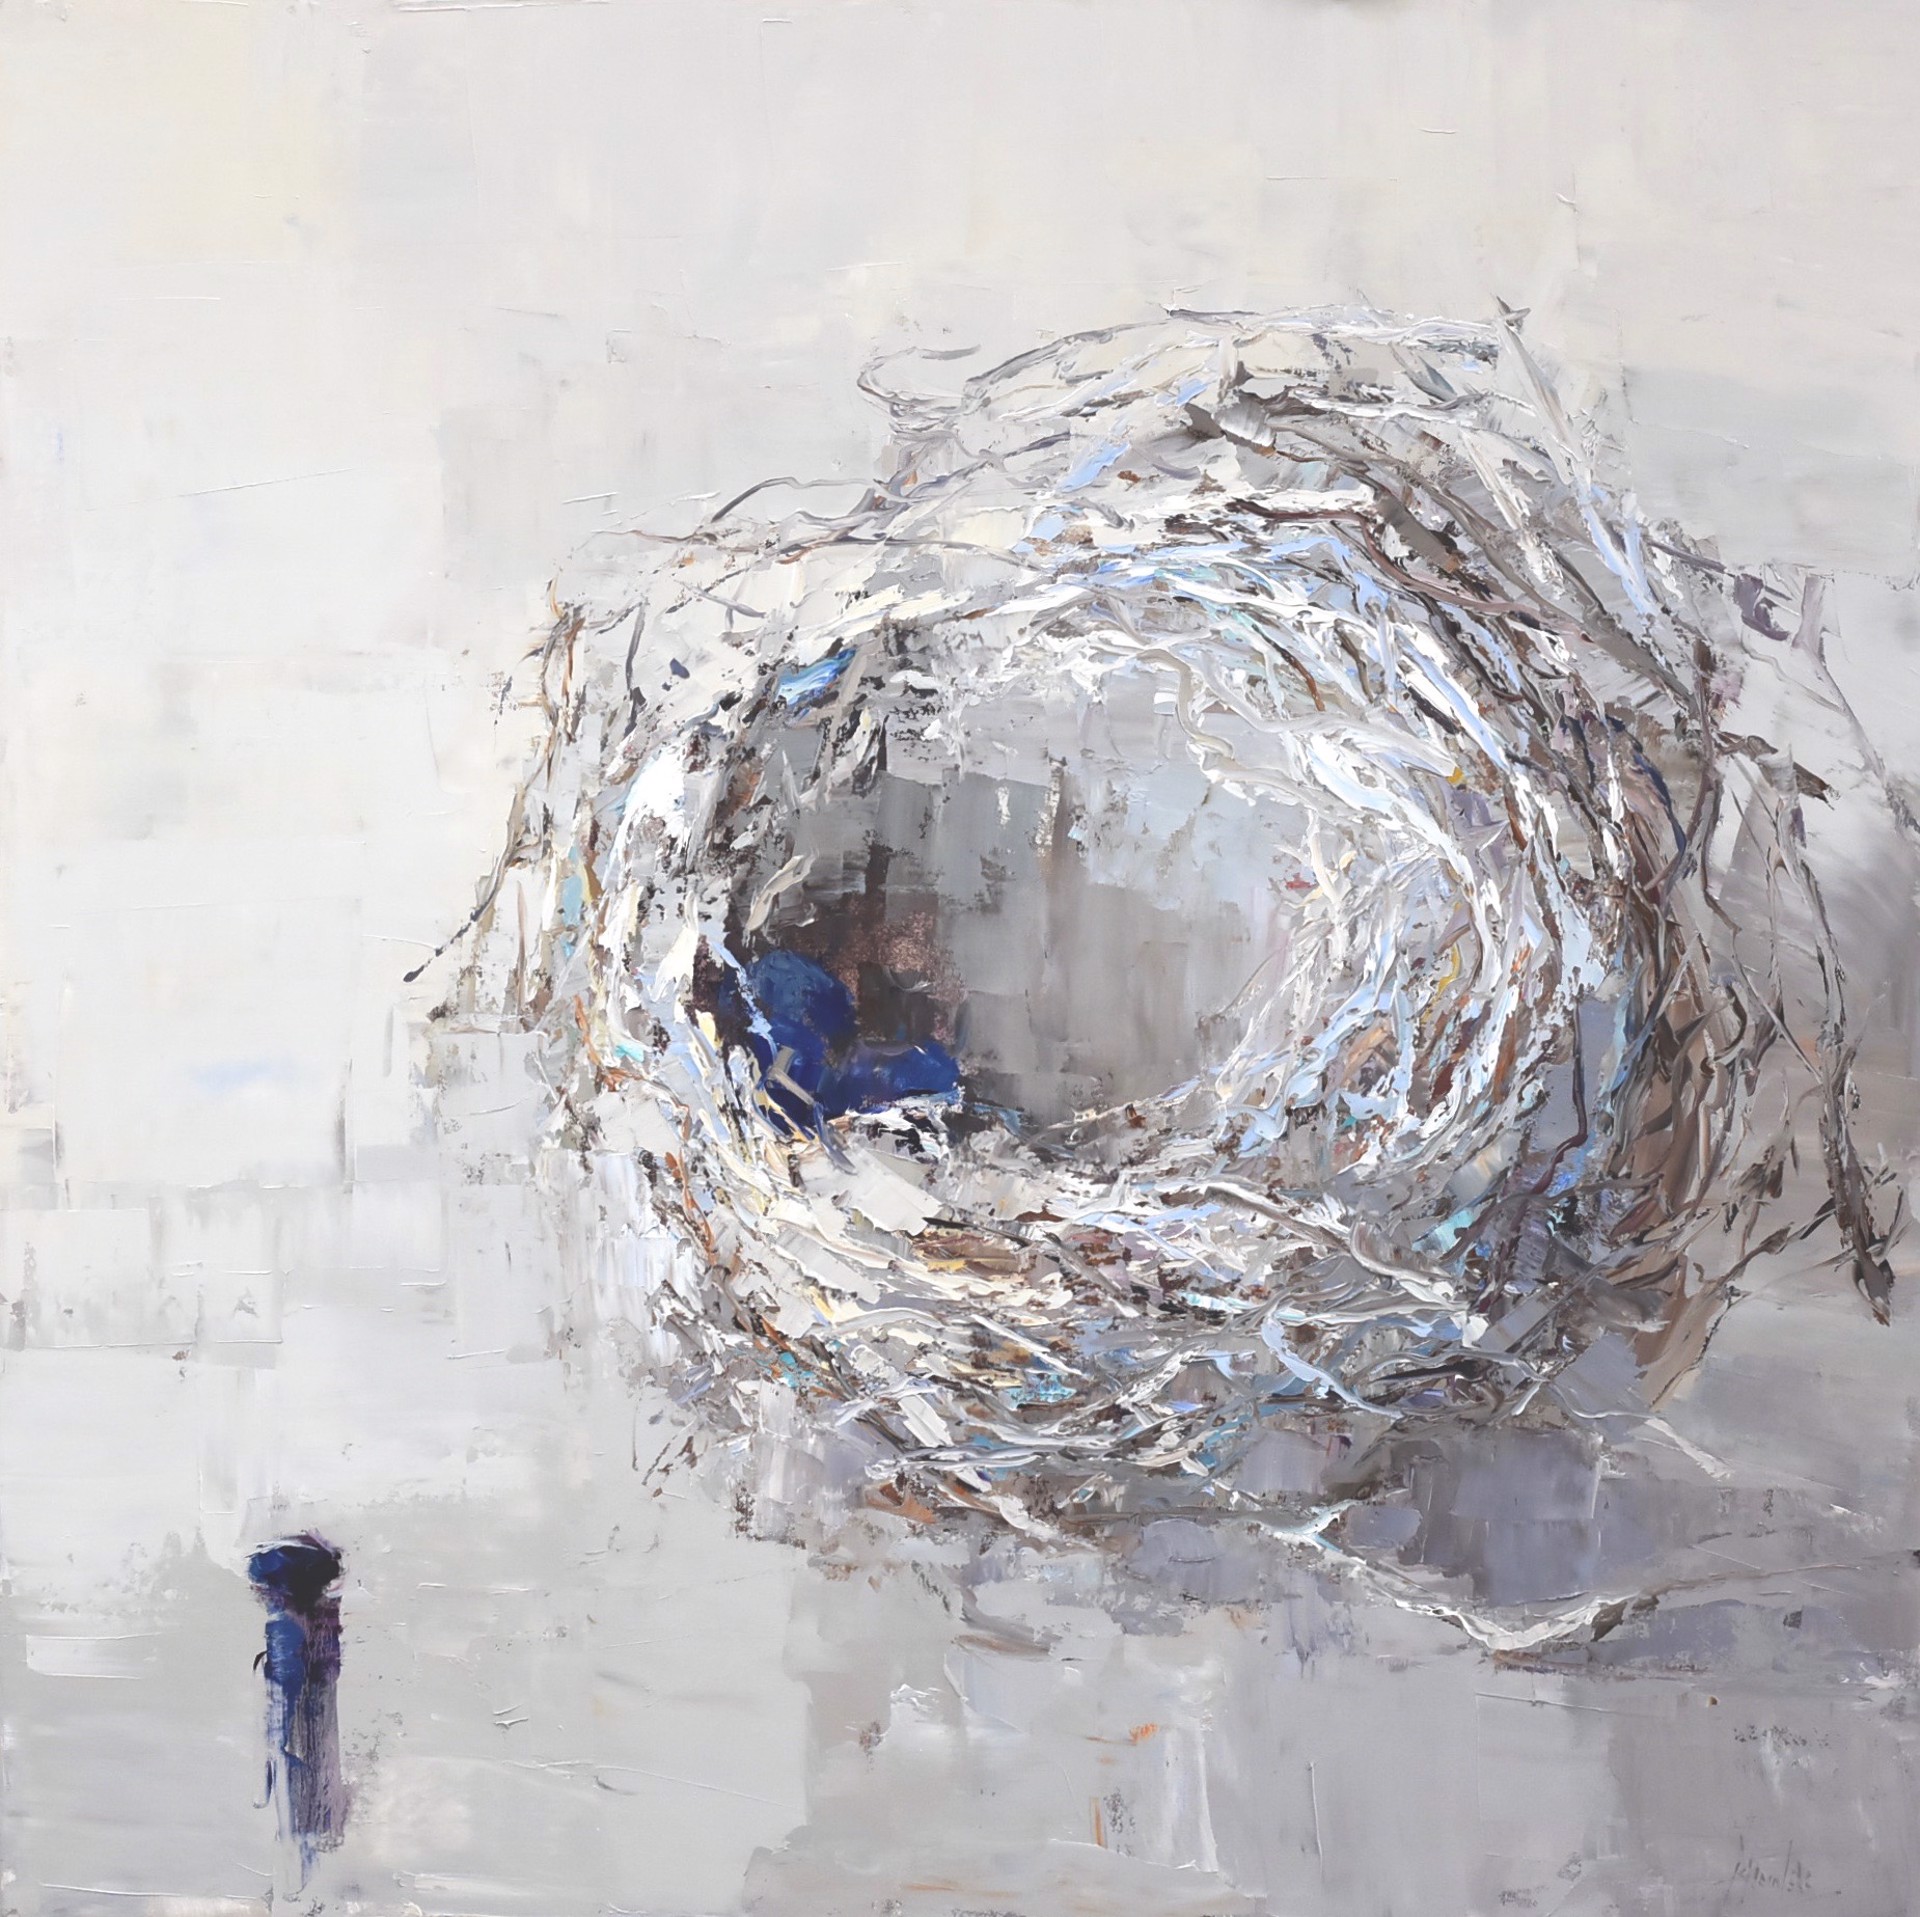 Nest by Barbara Flowers